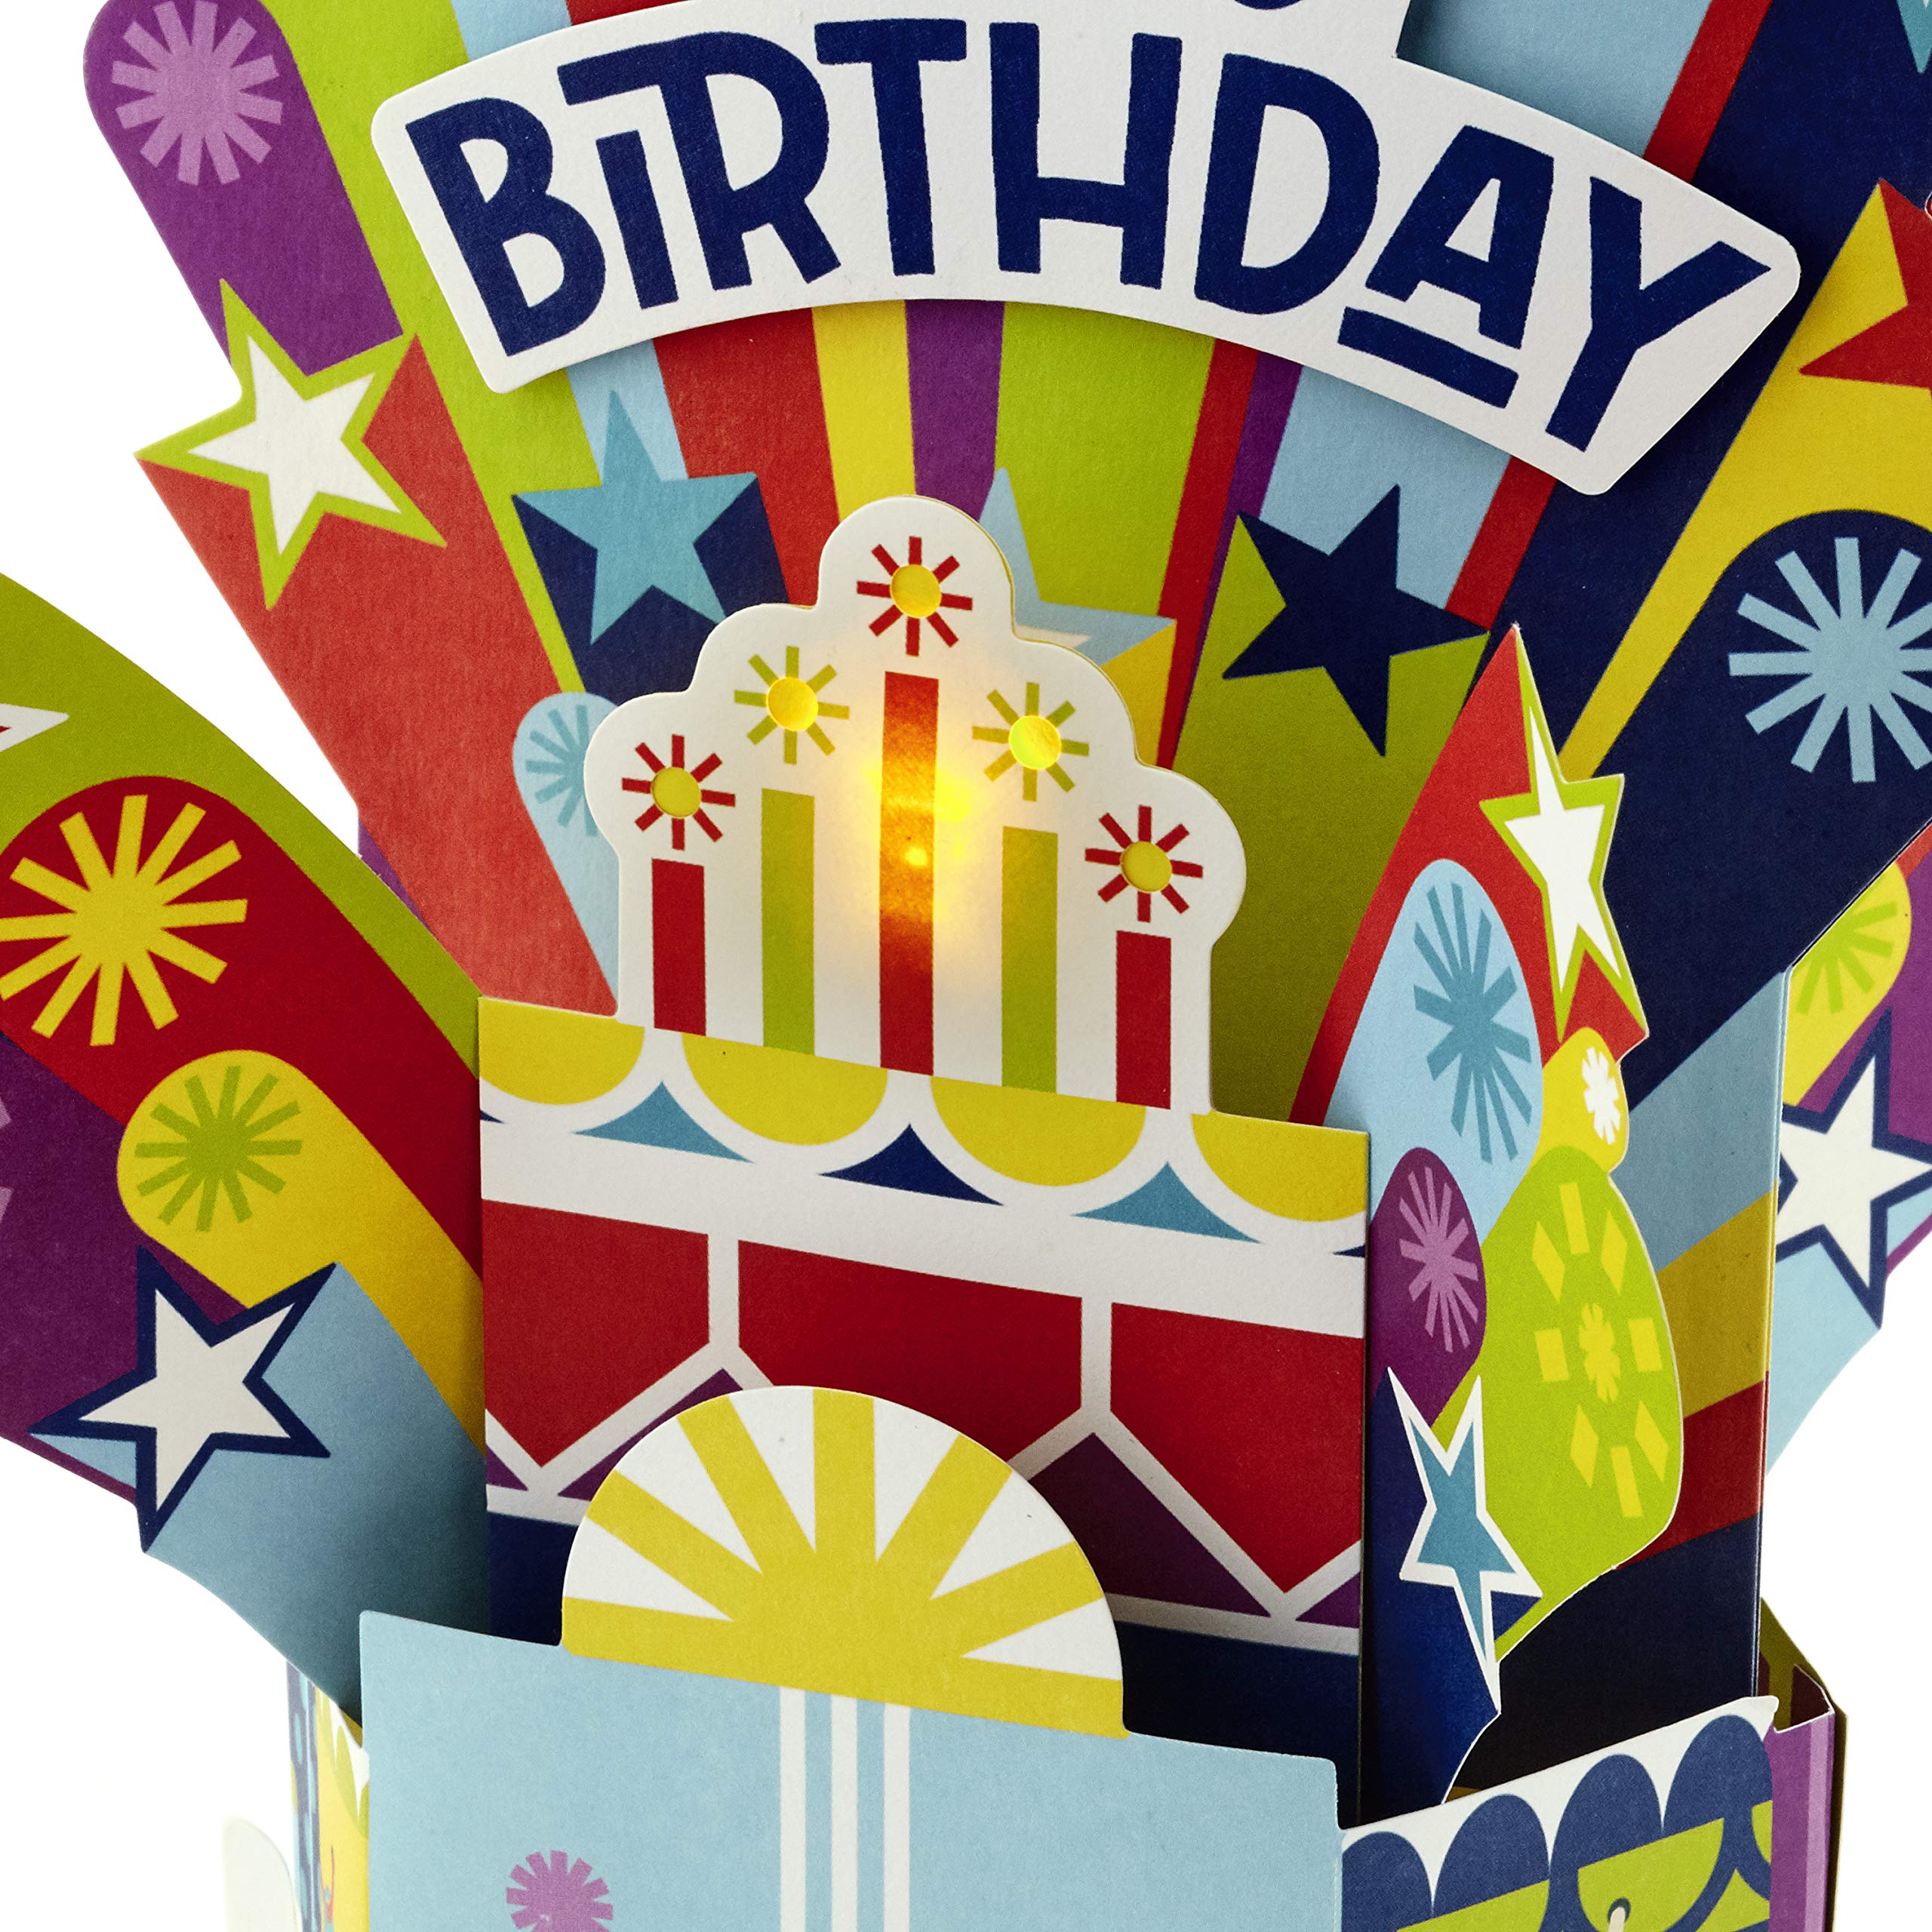 Hallmark Paper Wonder Pop Up Birthday Card with Music (Birthday Cake, Happy by Pharell Williams)